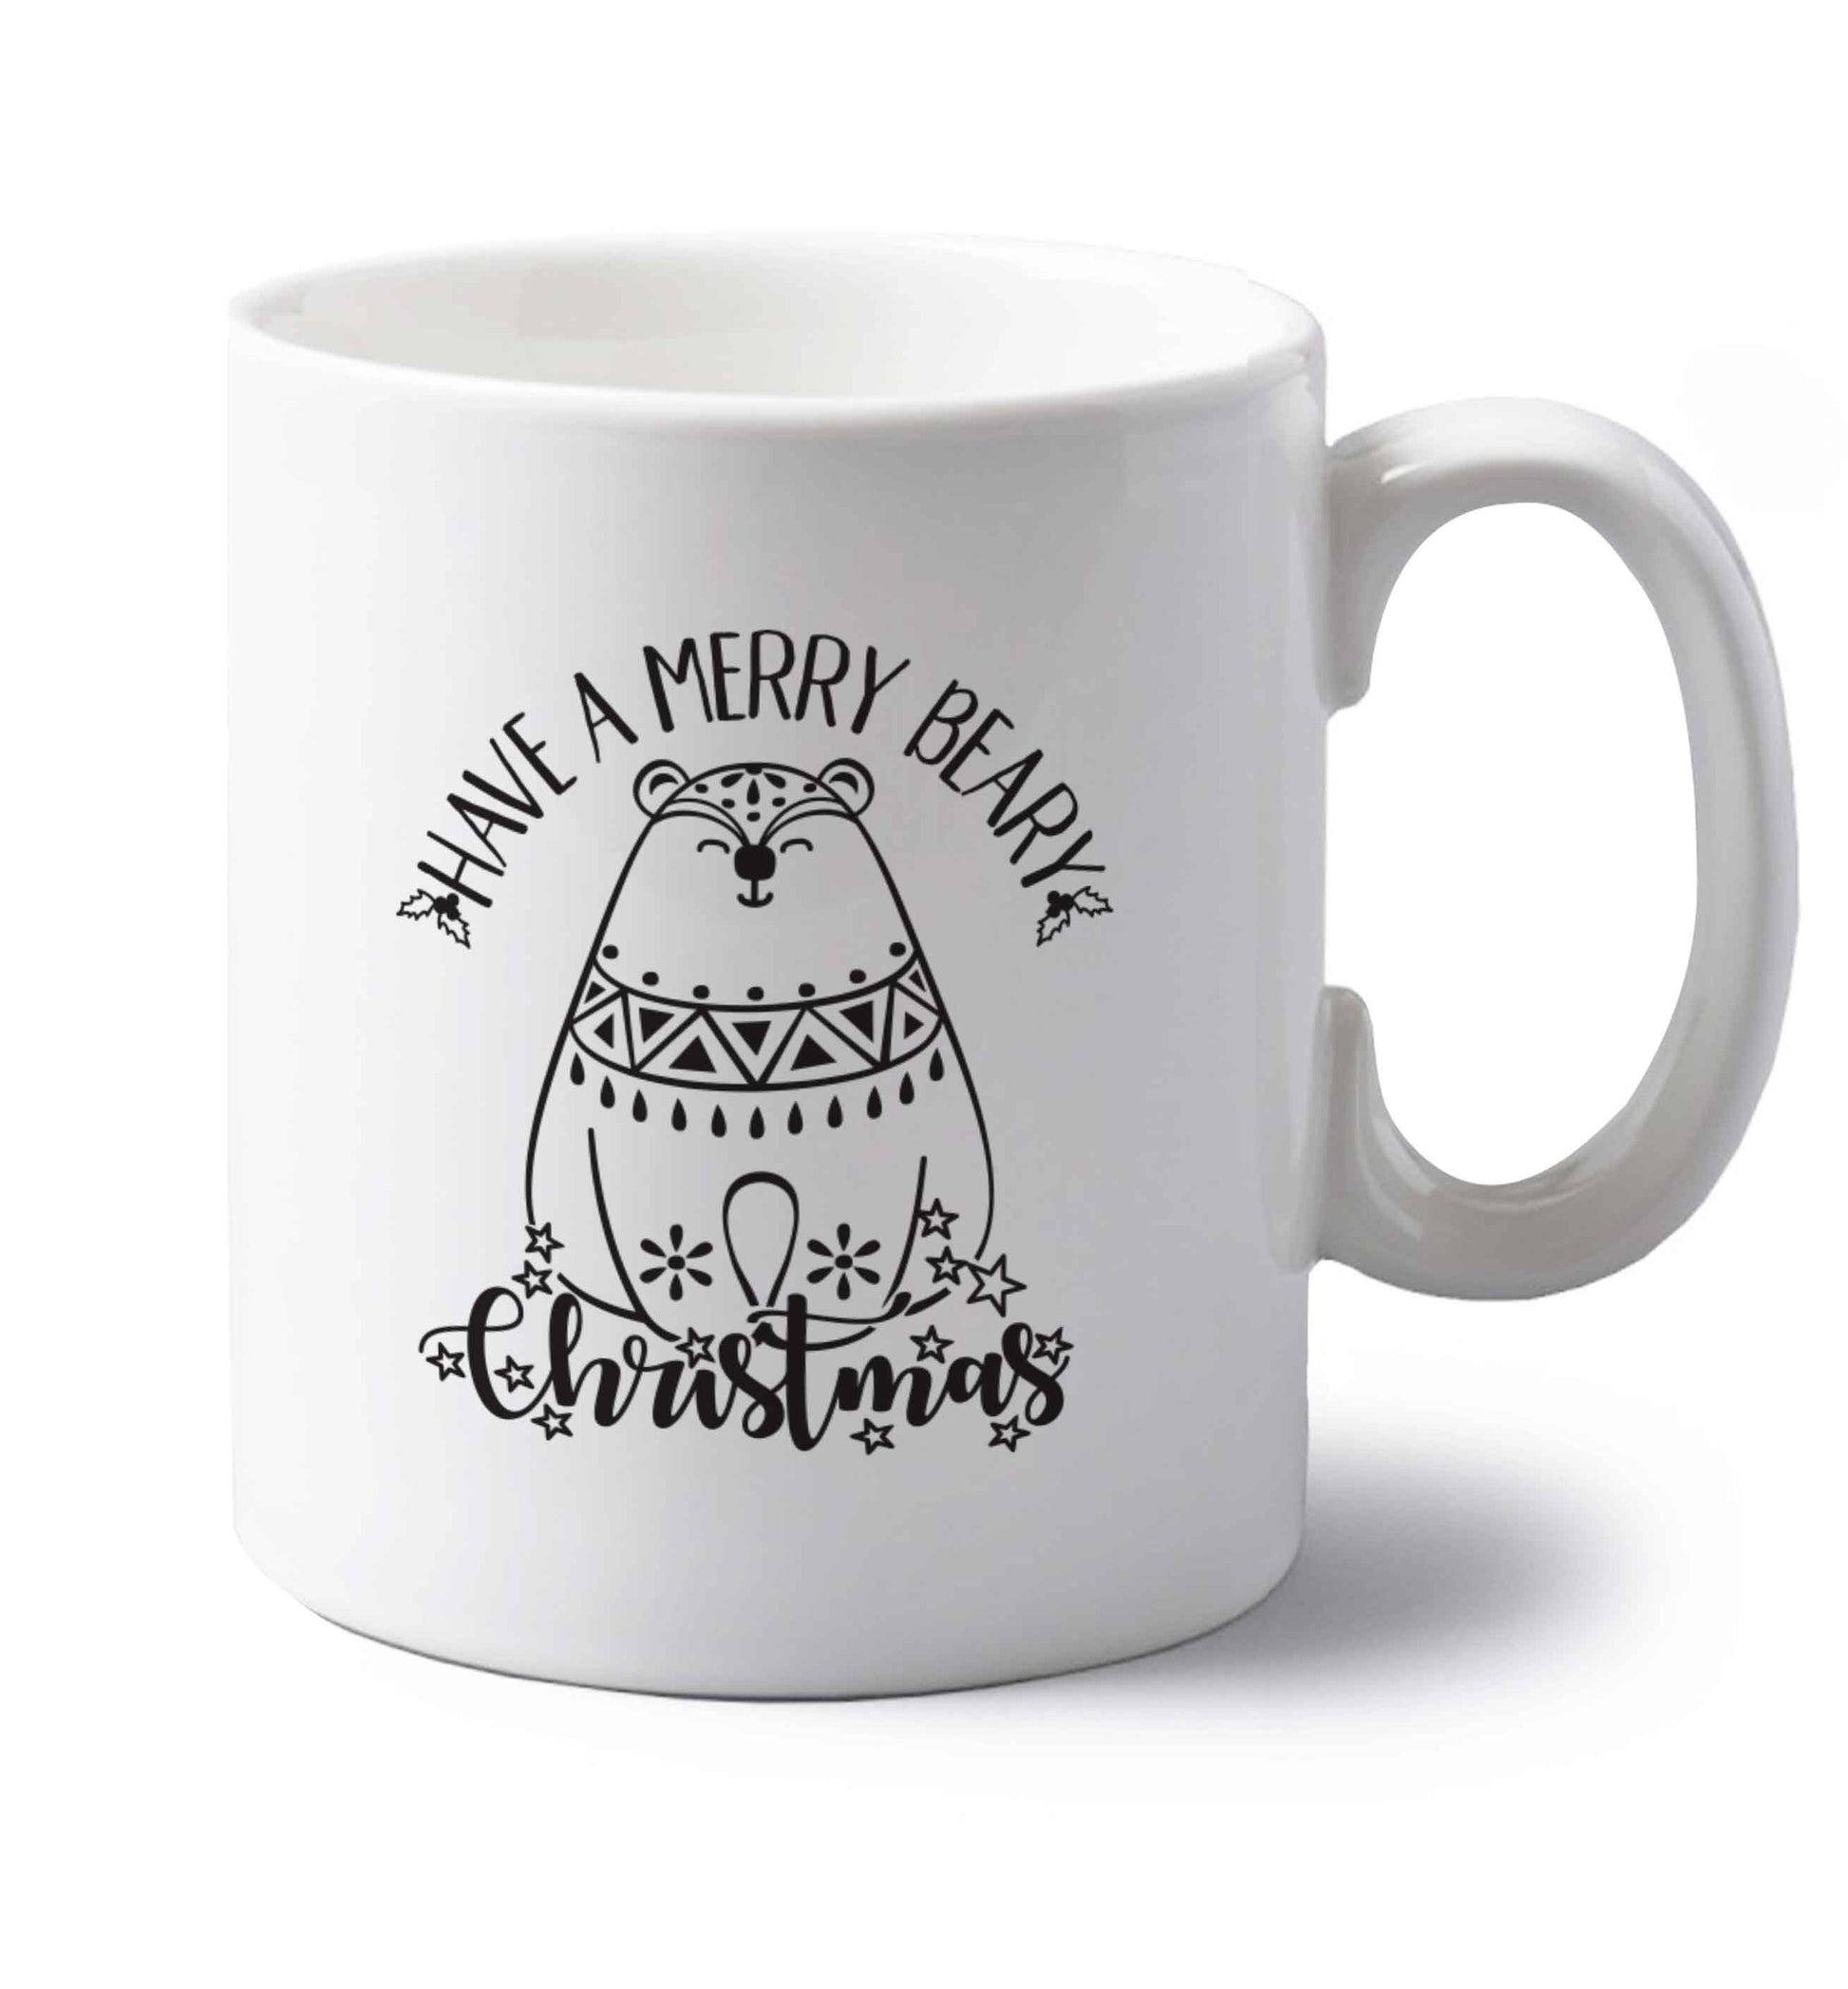 Have a merry beary Christmas left handed white ceramic mug 